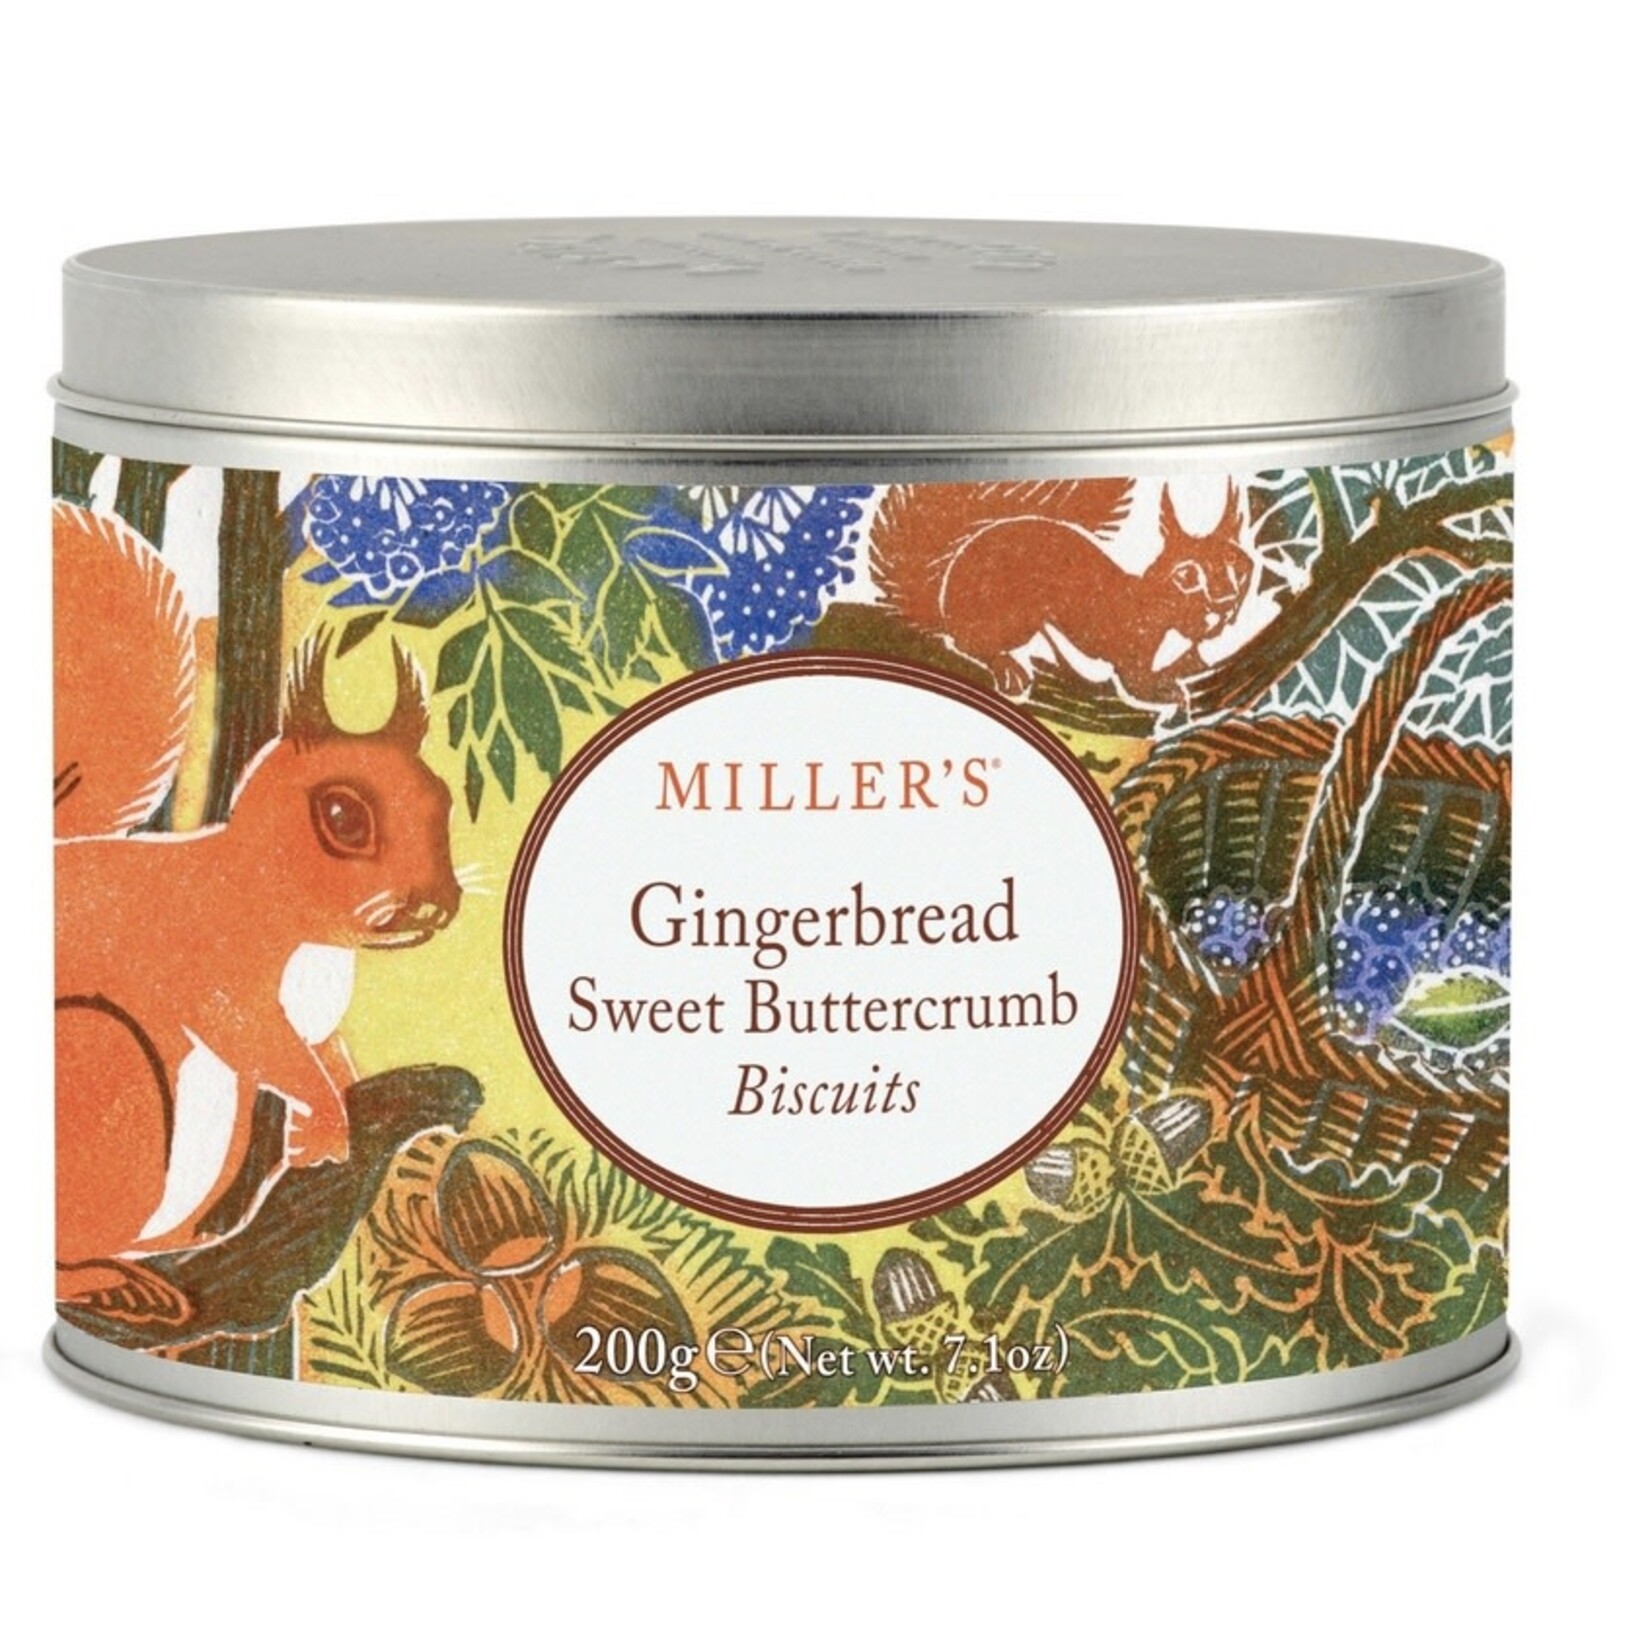 MILLER'S MILLER'S Gingerbread Sweet Buttercrumb Biscuits